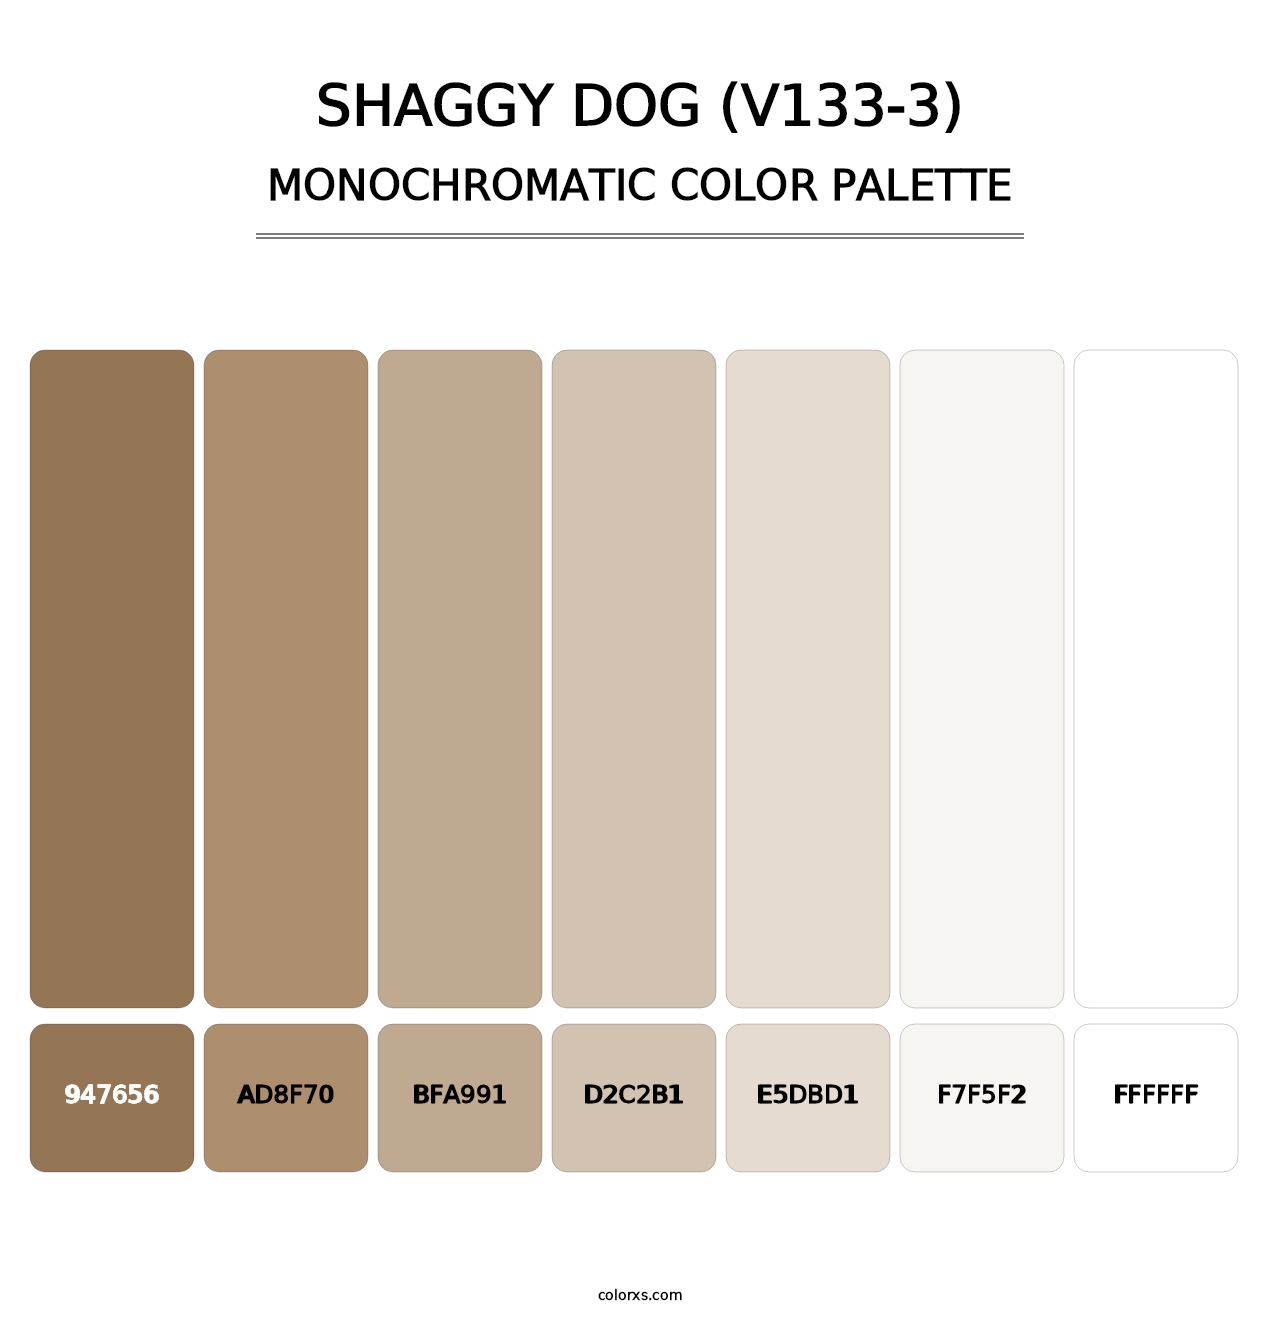 Shaggy Dog (V133-3) - Monochromatic Color Palette